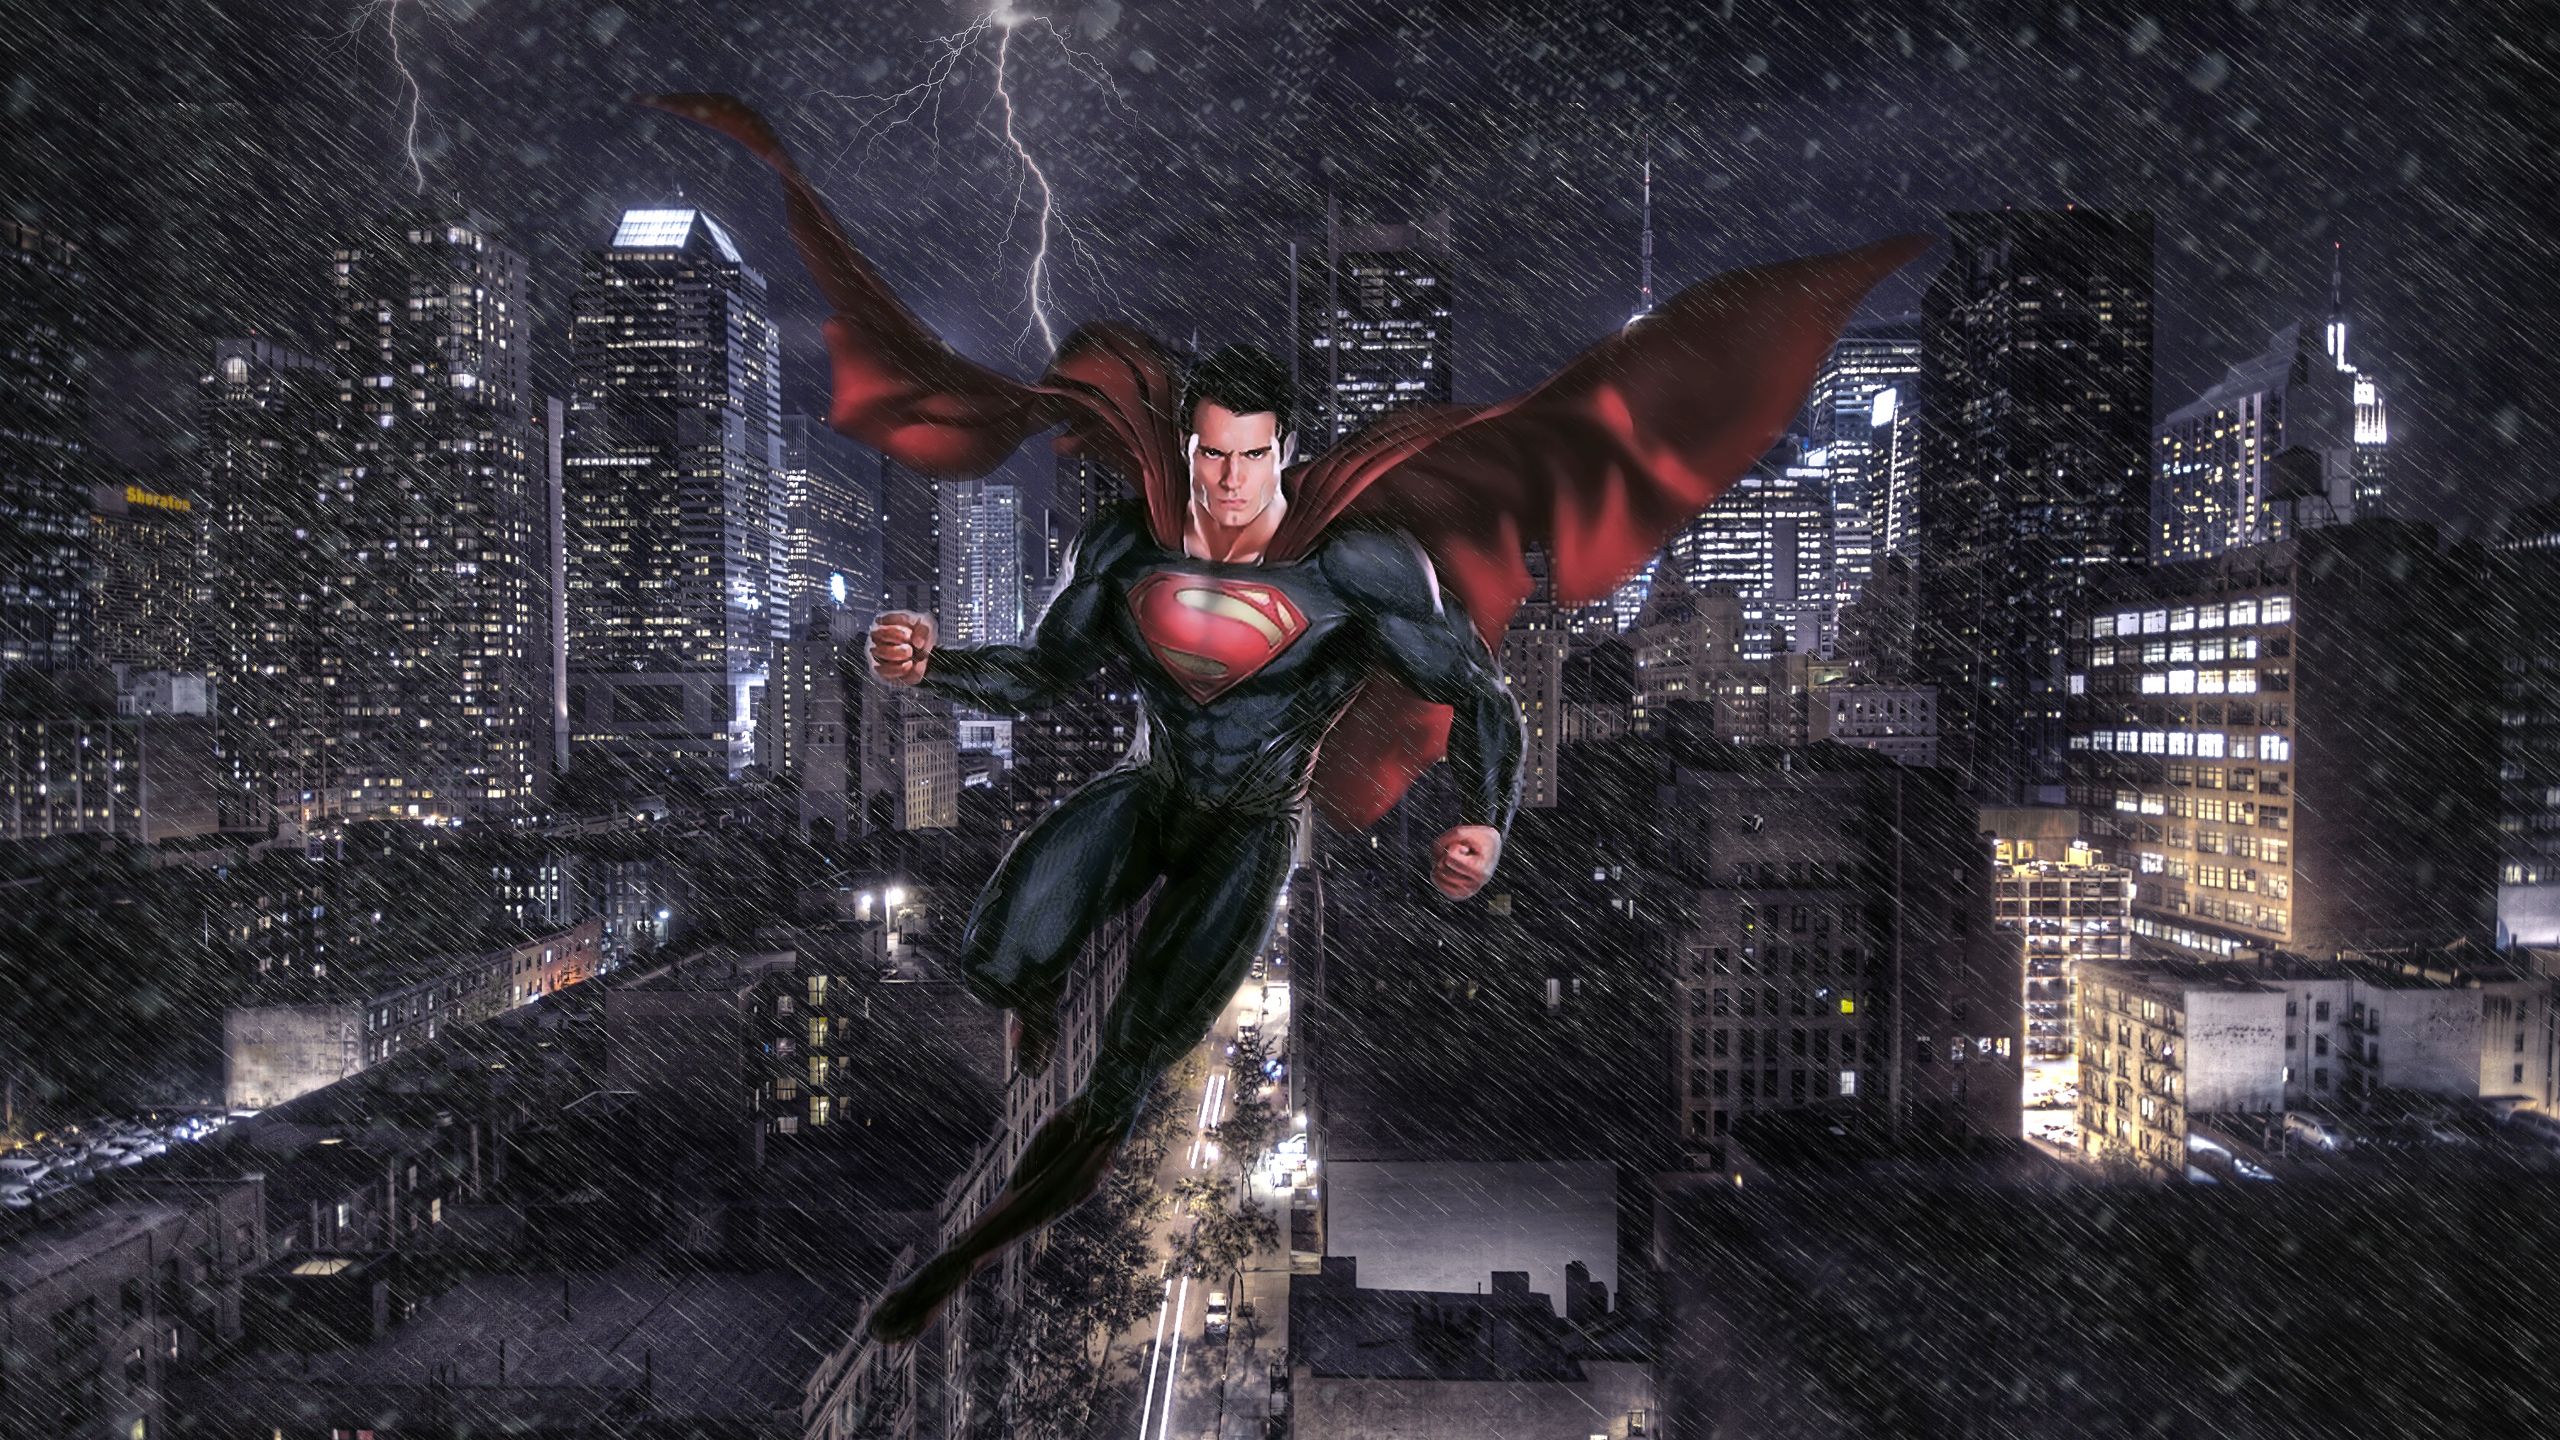 superman flying images, superman man of steel wallpaper hd 1920x1080